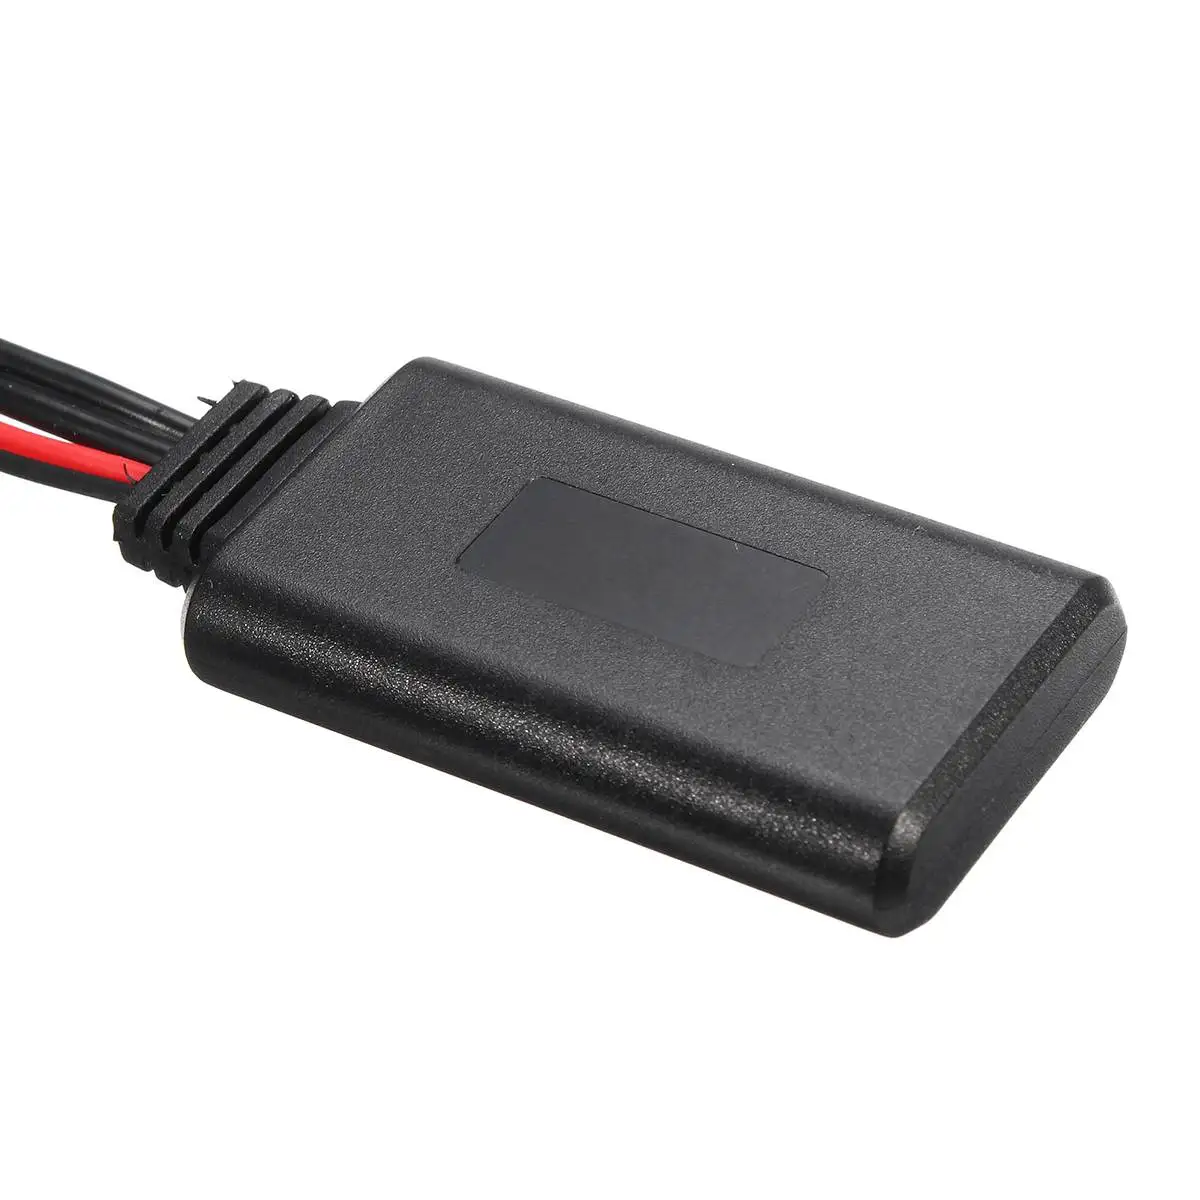 Bluetooth аудио адаптер кабель для VW мкд RNS 510 RCD 200 210 310 500 510 Дельта 6 Автомобильная электроника Аксессуары